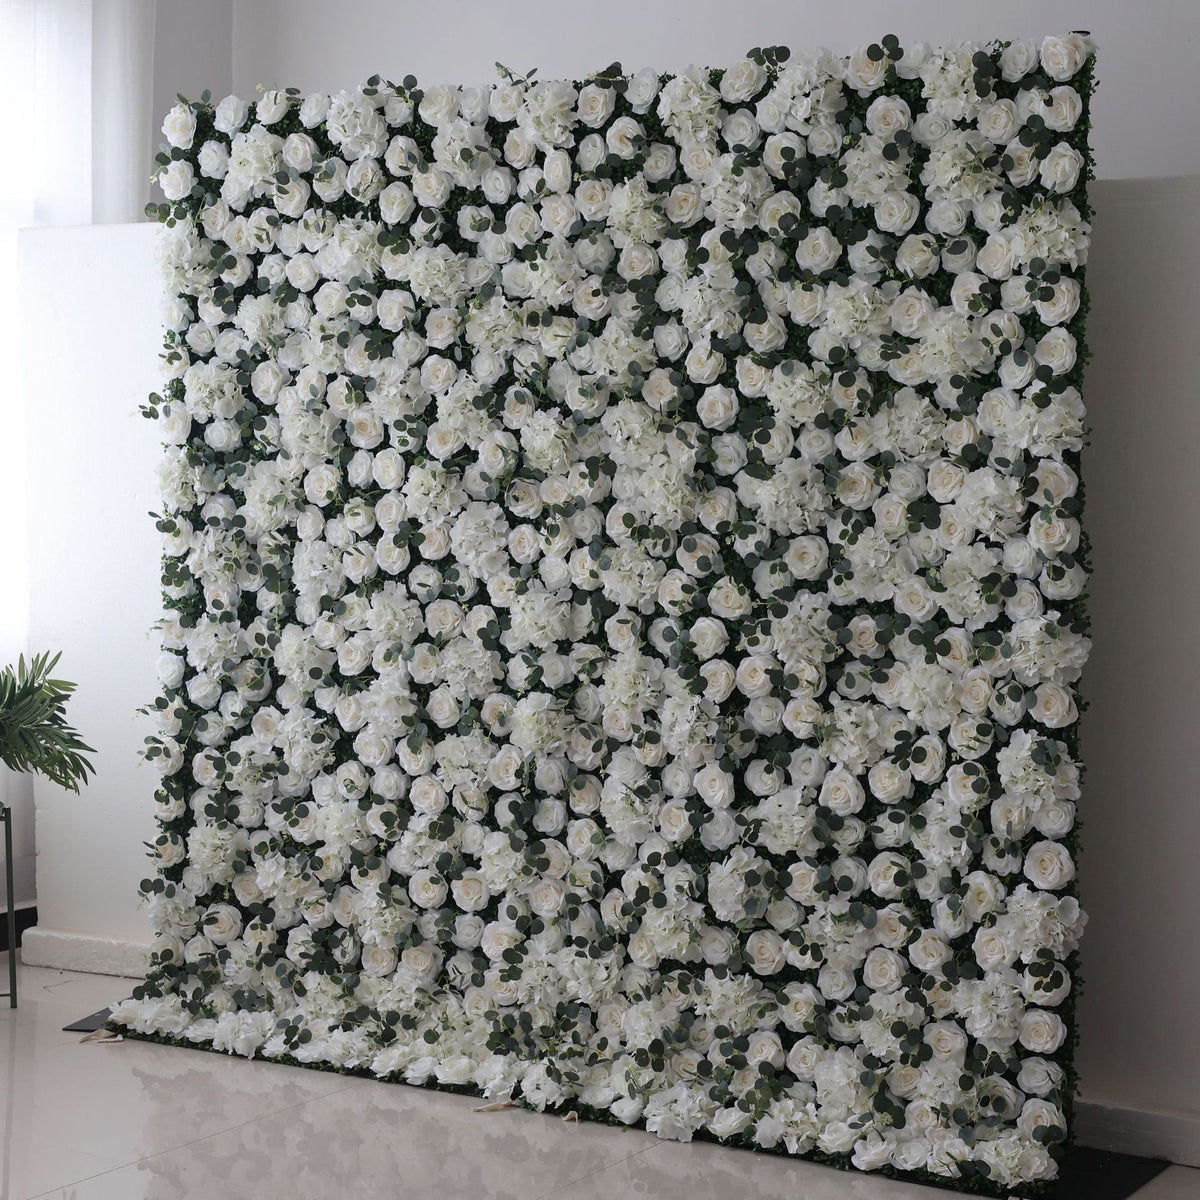 3D Artificial Flower Wall Arrangement Wedding Party Birthday Backdrop Decor HQ1123